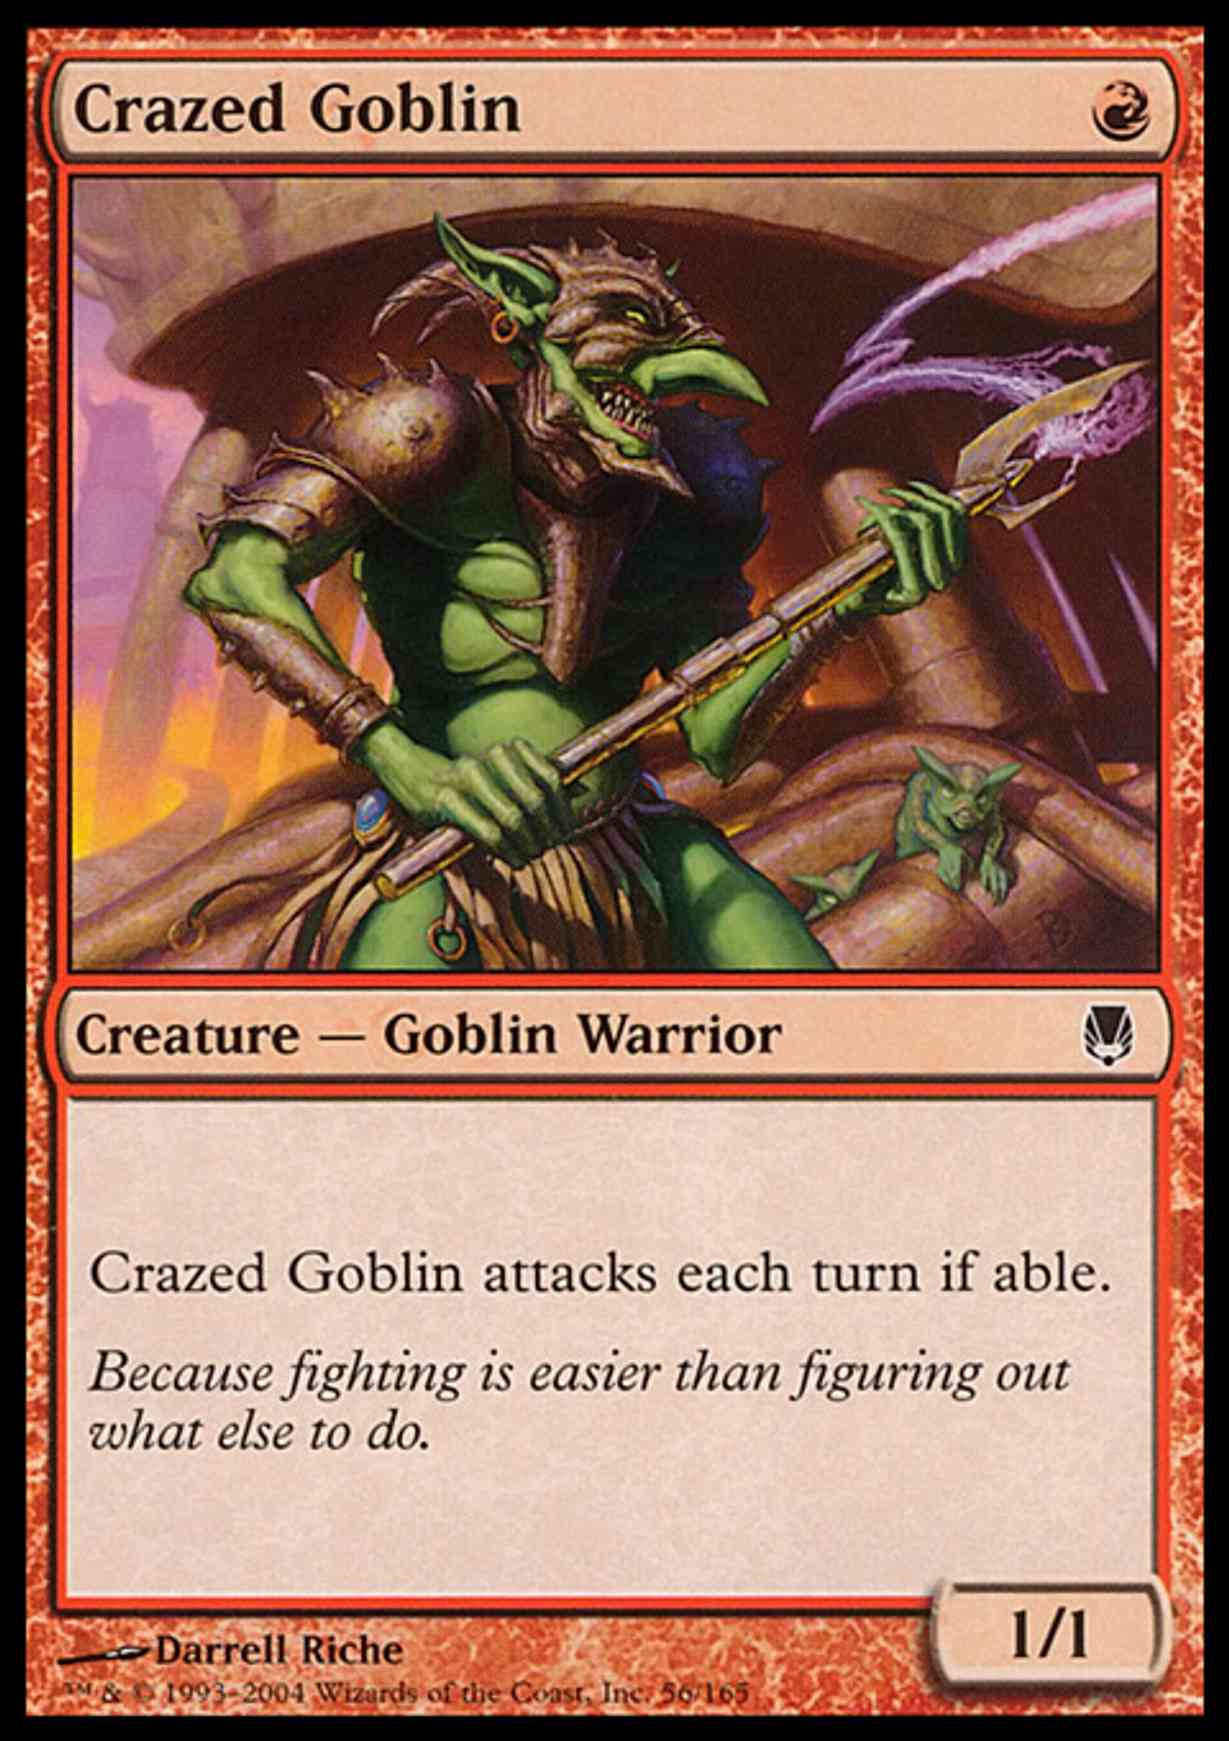 Crazed Goblin magic card front